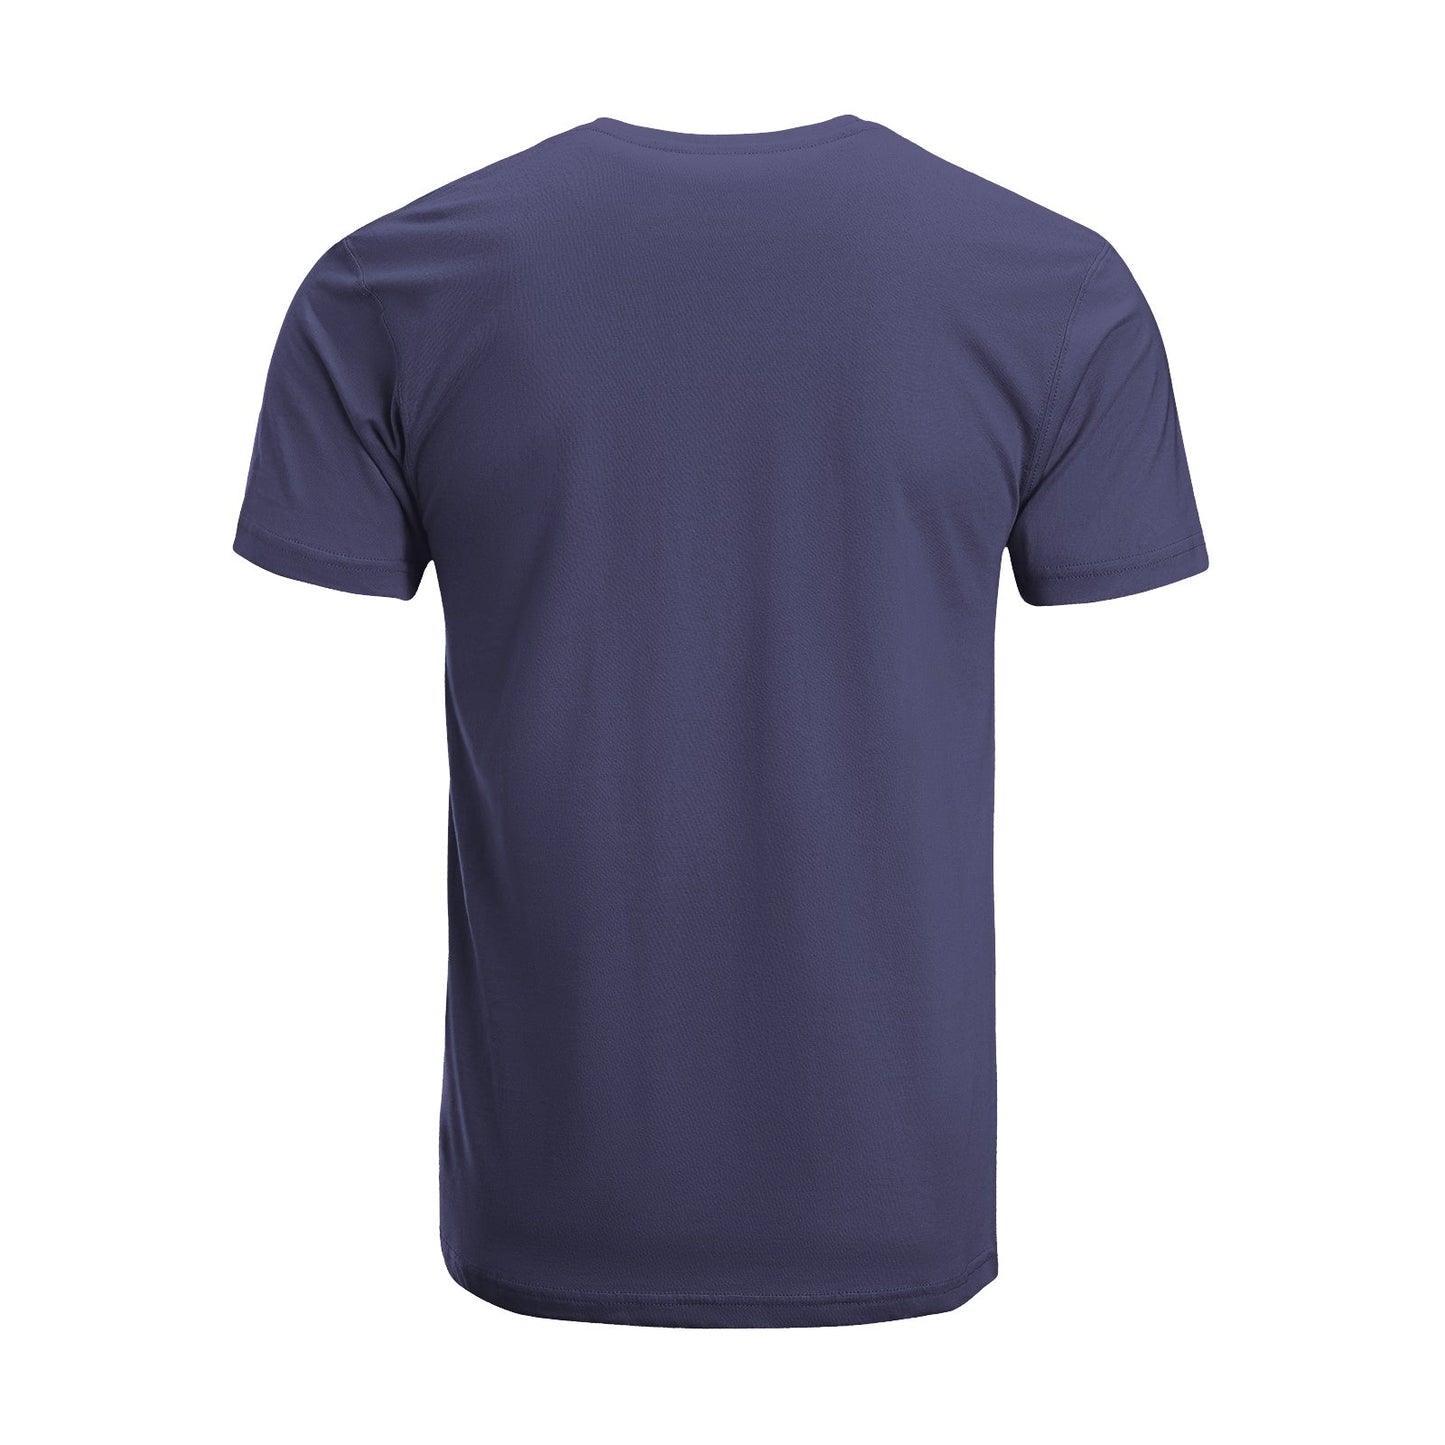 Unisex Short Sleeve Crew Neck Cotton Jersey T-Shirt VEGAN 11